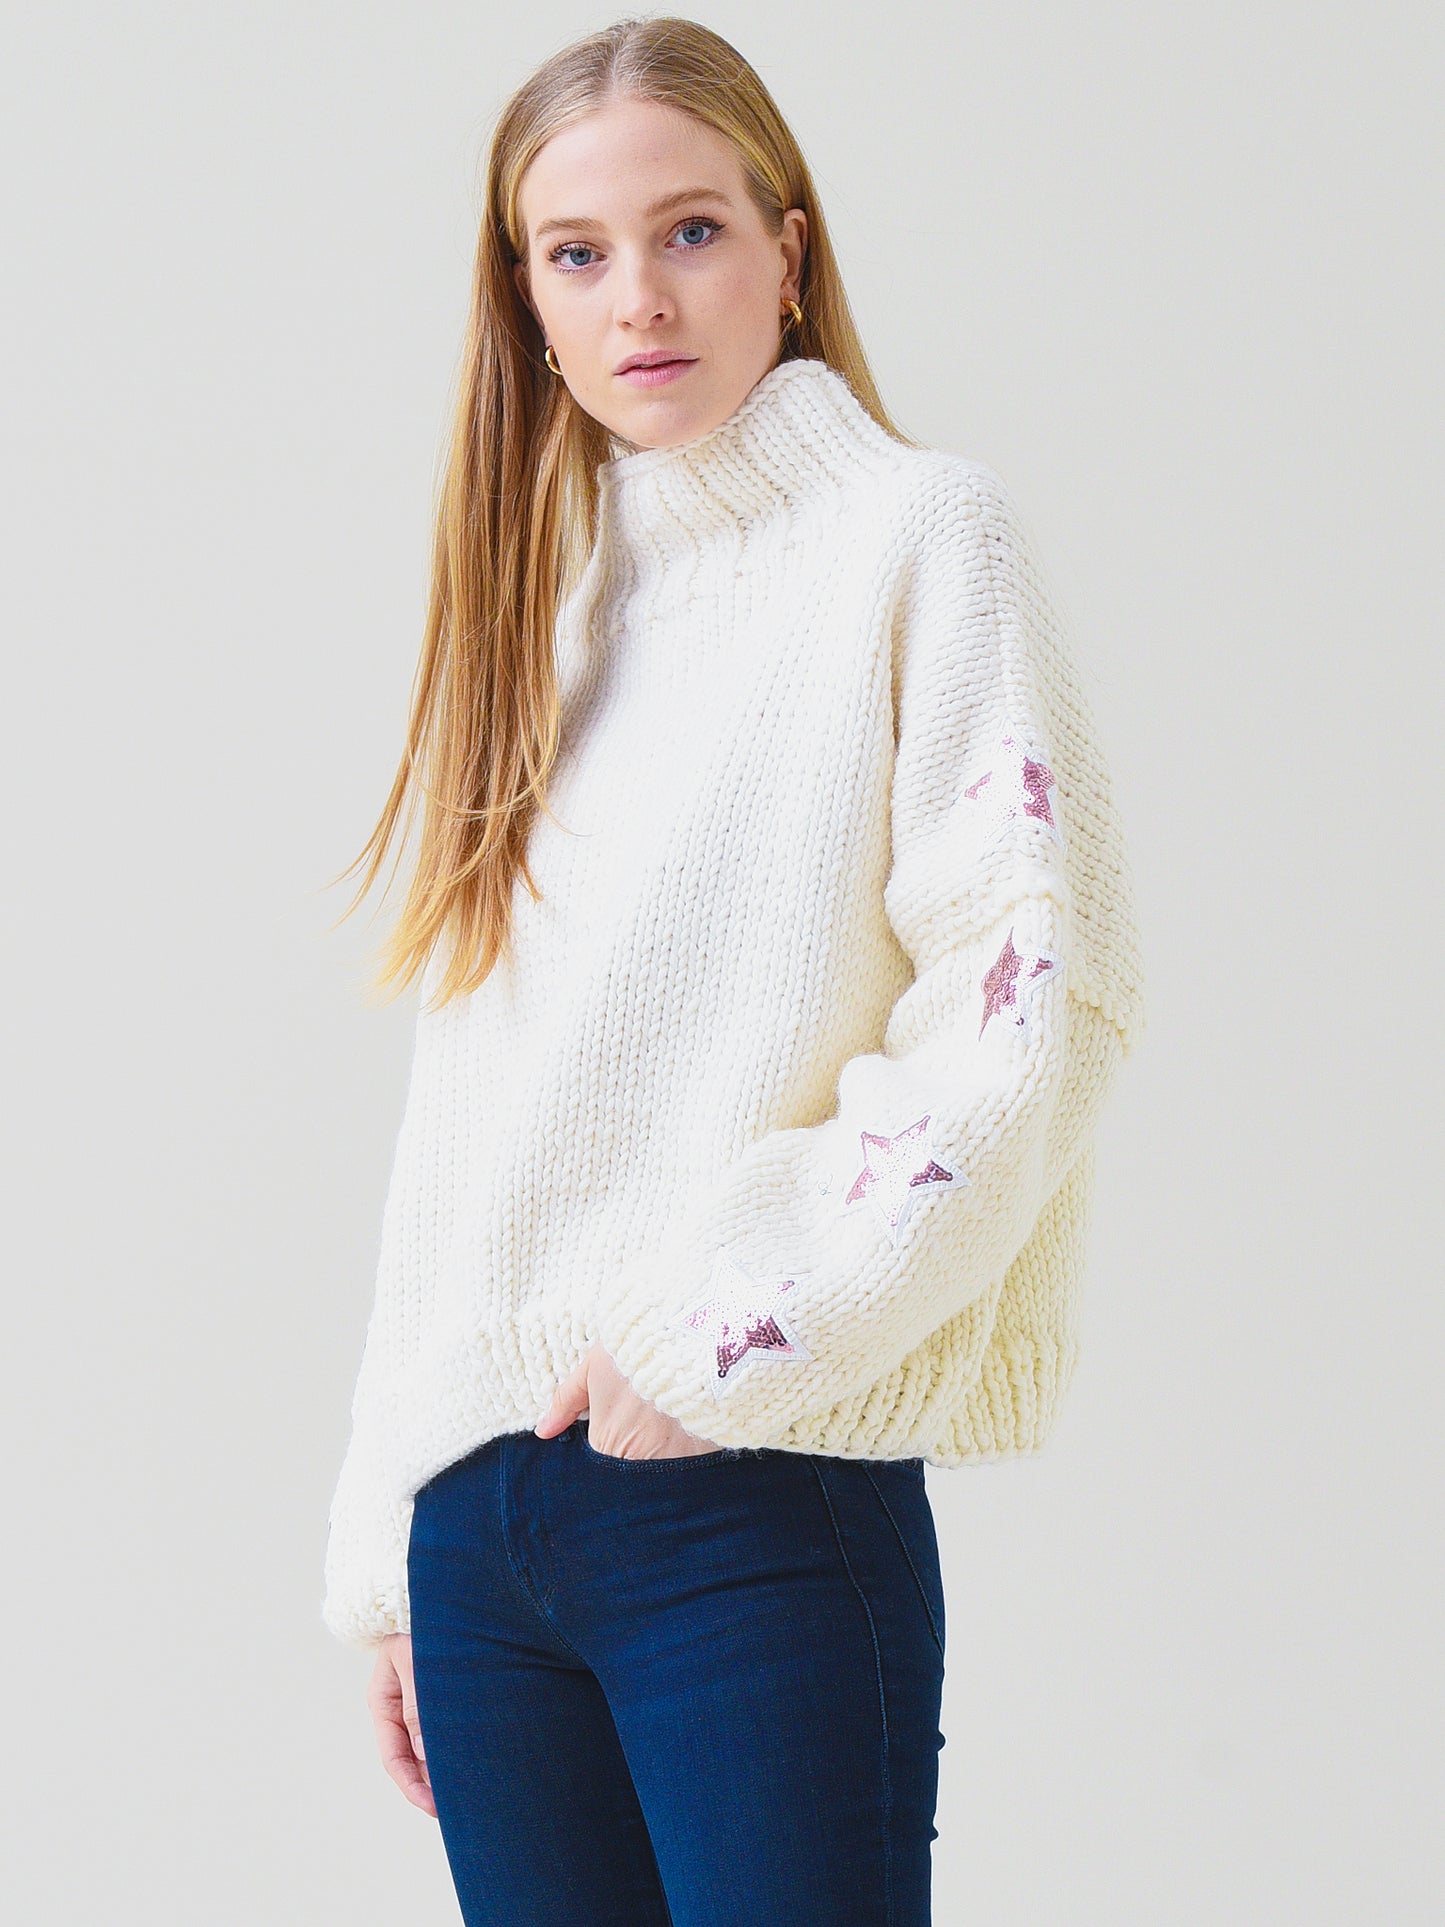 GOGO Women's Star Pullover Sweater